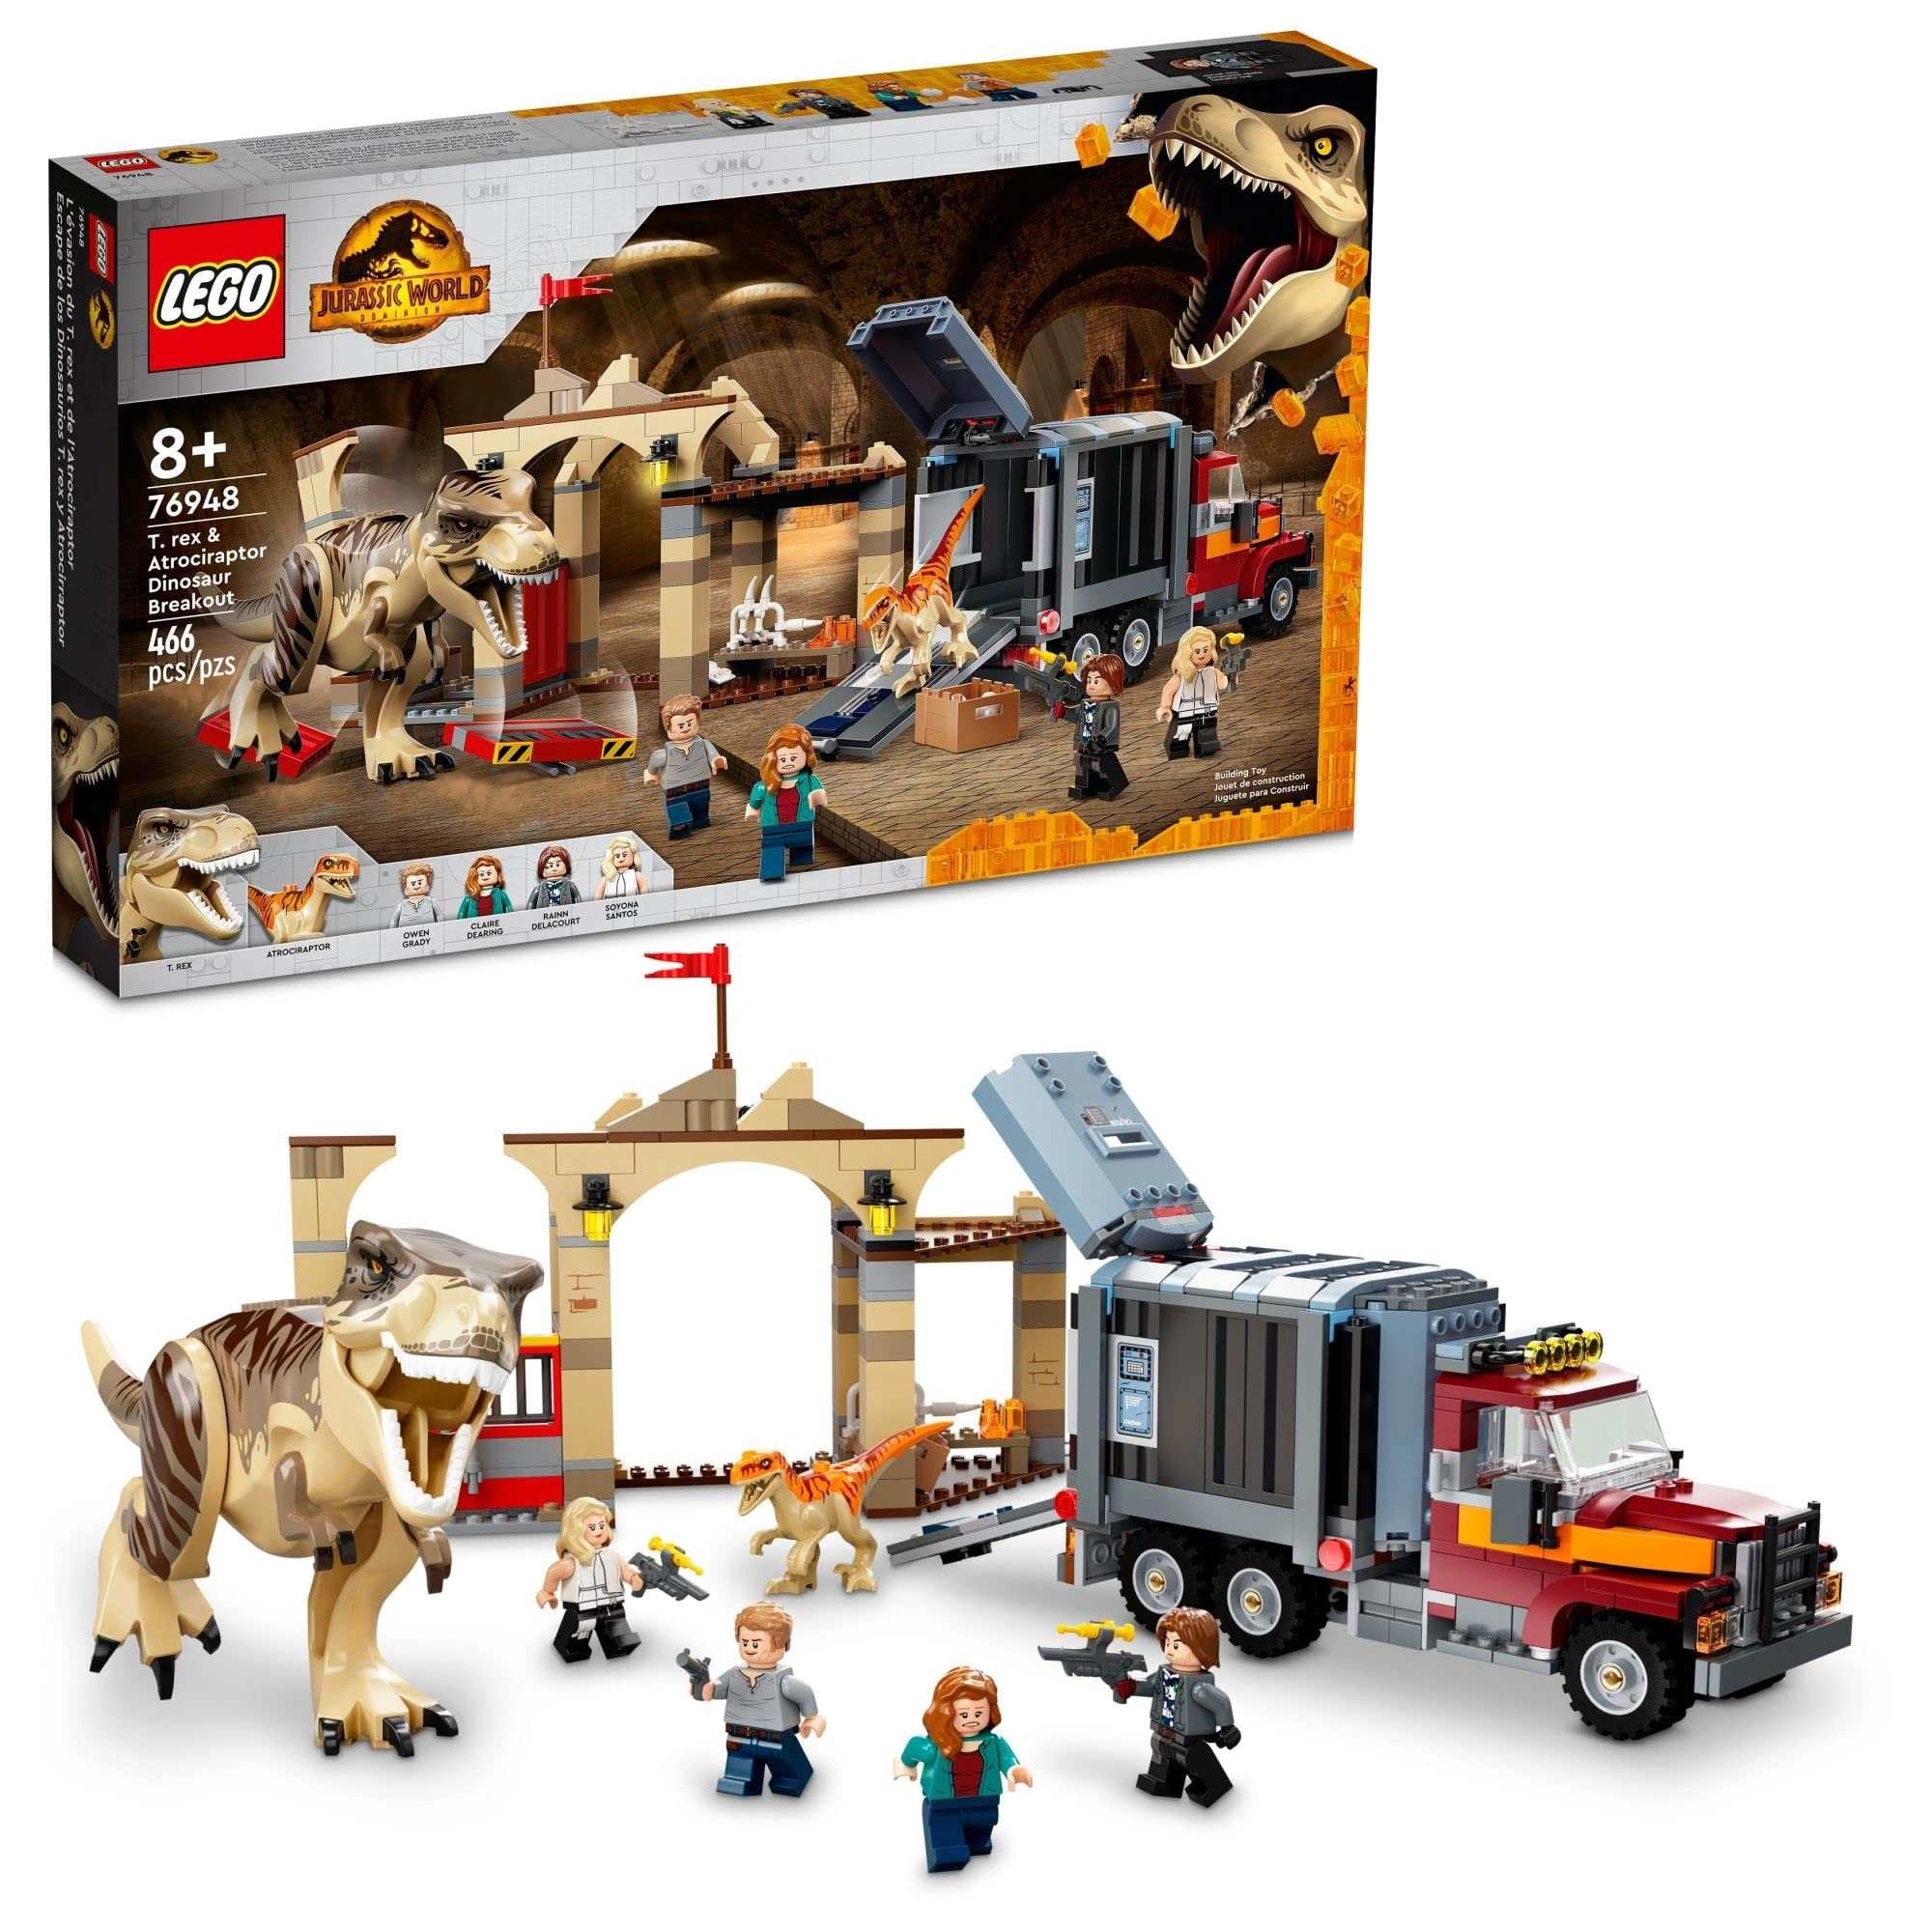 LEGO T. rex & Atrociraptor Dinosaur Breakout